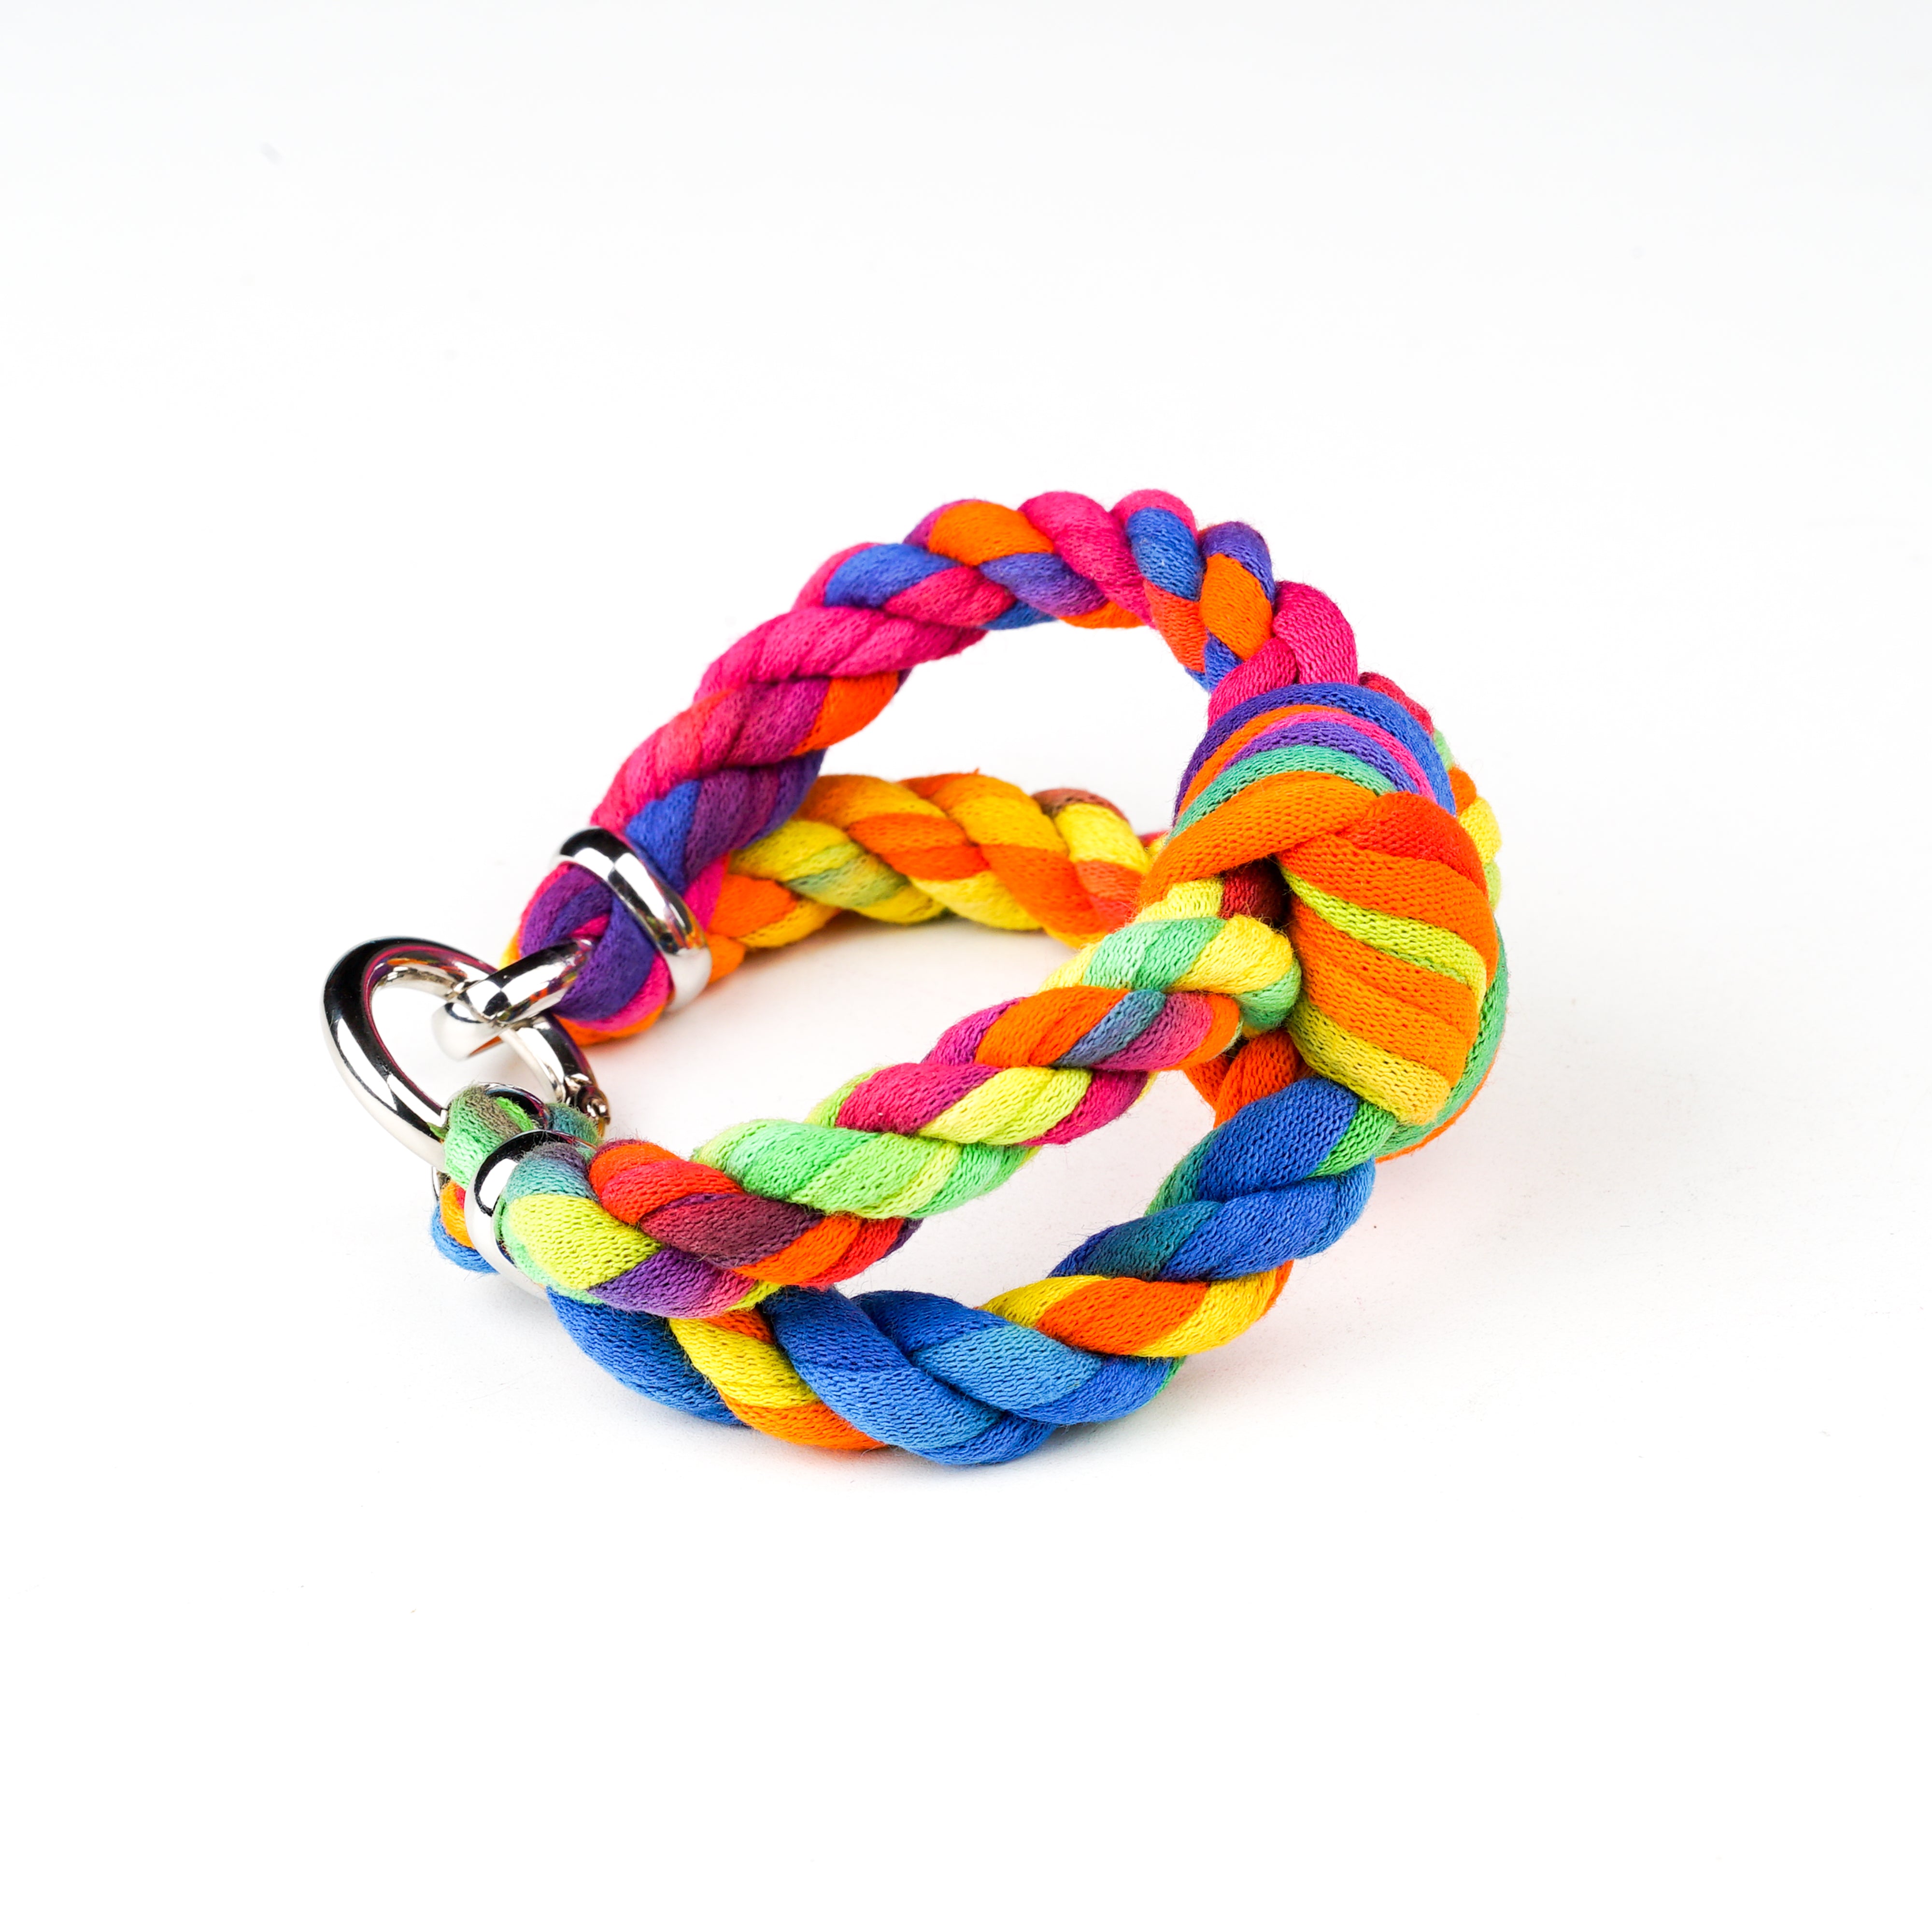 Rainbow Loom French Braid Bracelet Tutorial - How To Make A Loom Band  French Braid Bracelet - YouTube